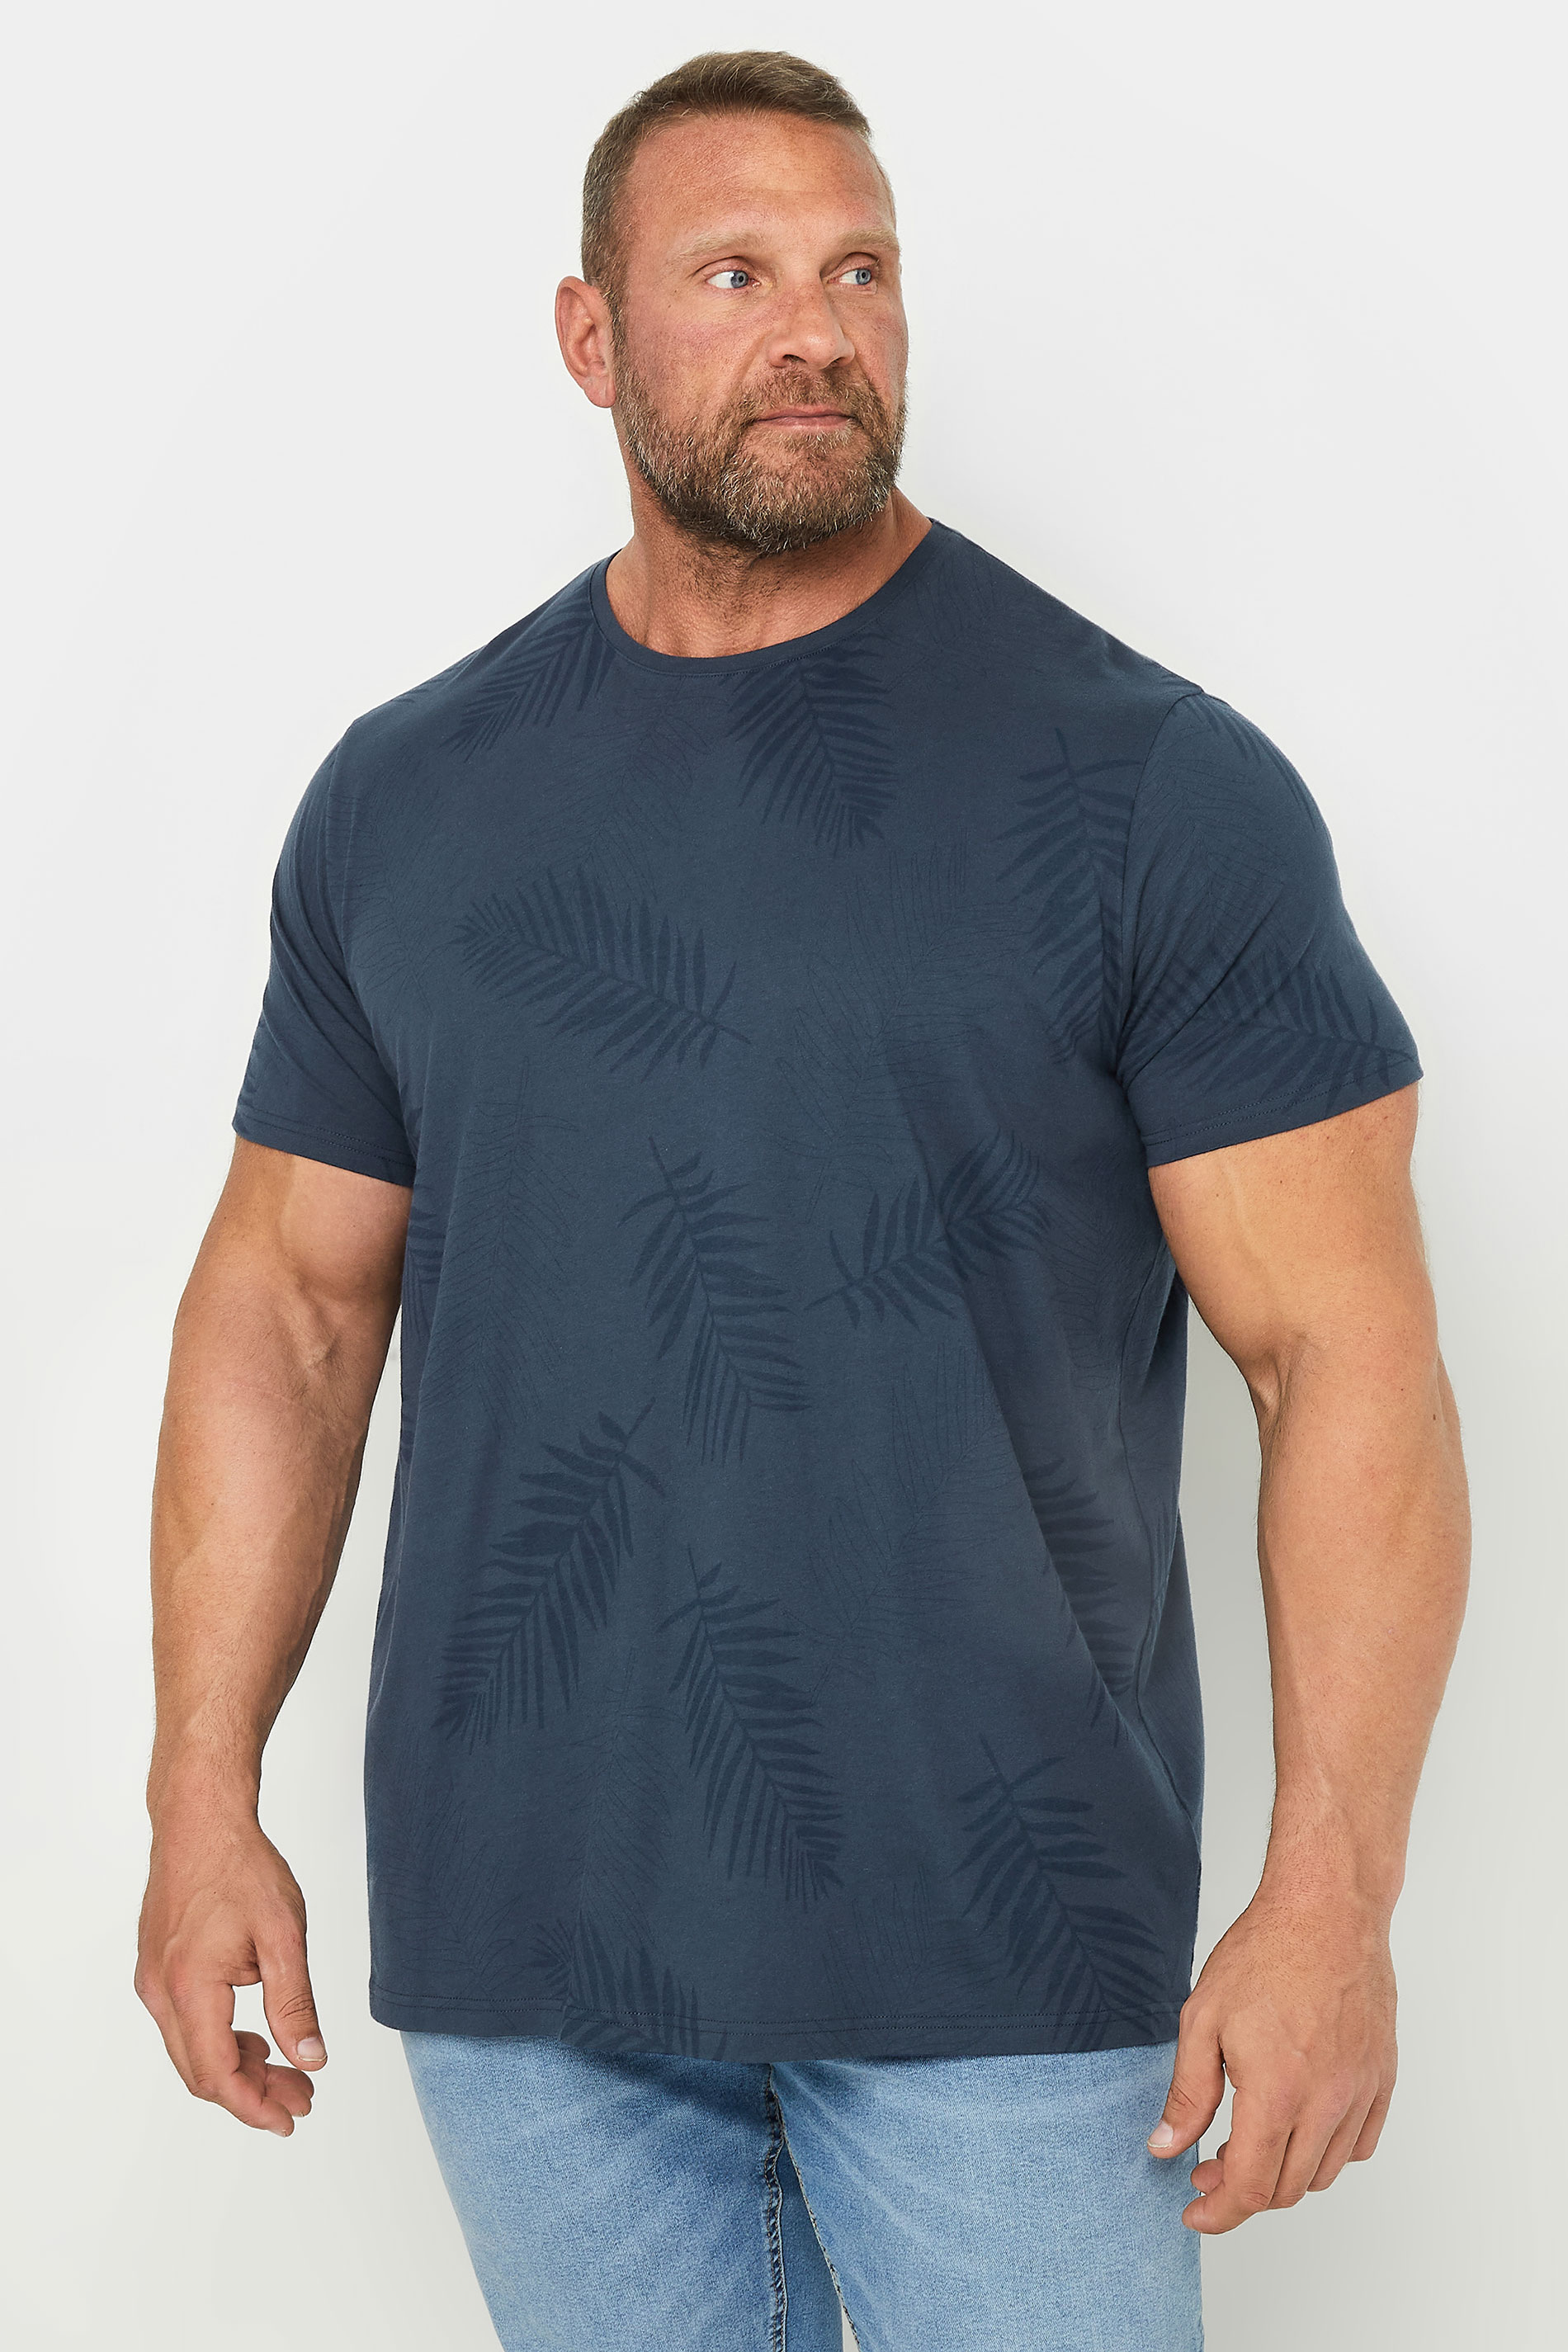 BadRhino Big & Tall Navy Blue Leaf Print T-Shirt | BadRhino 2